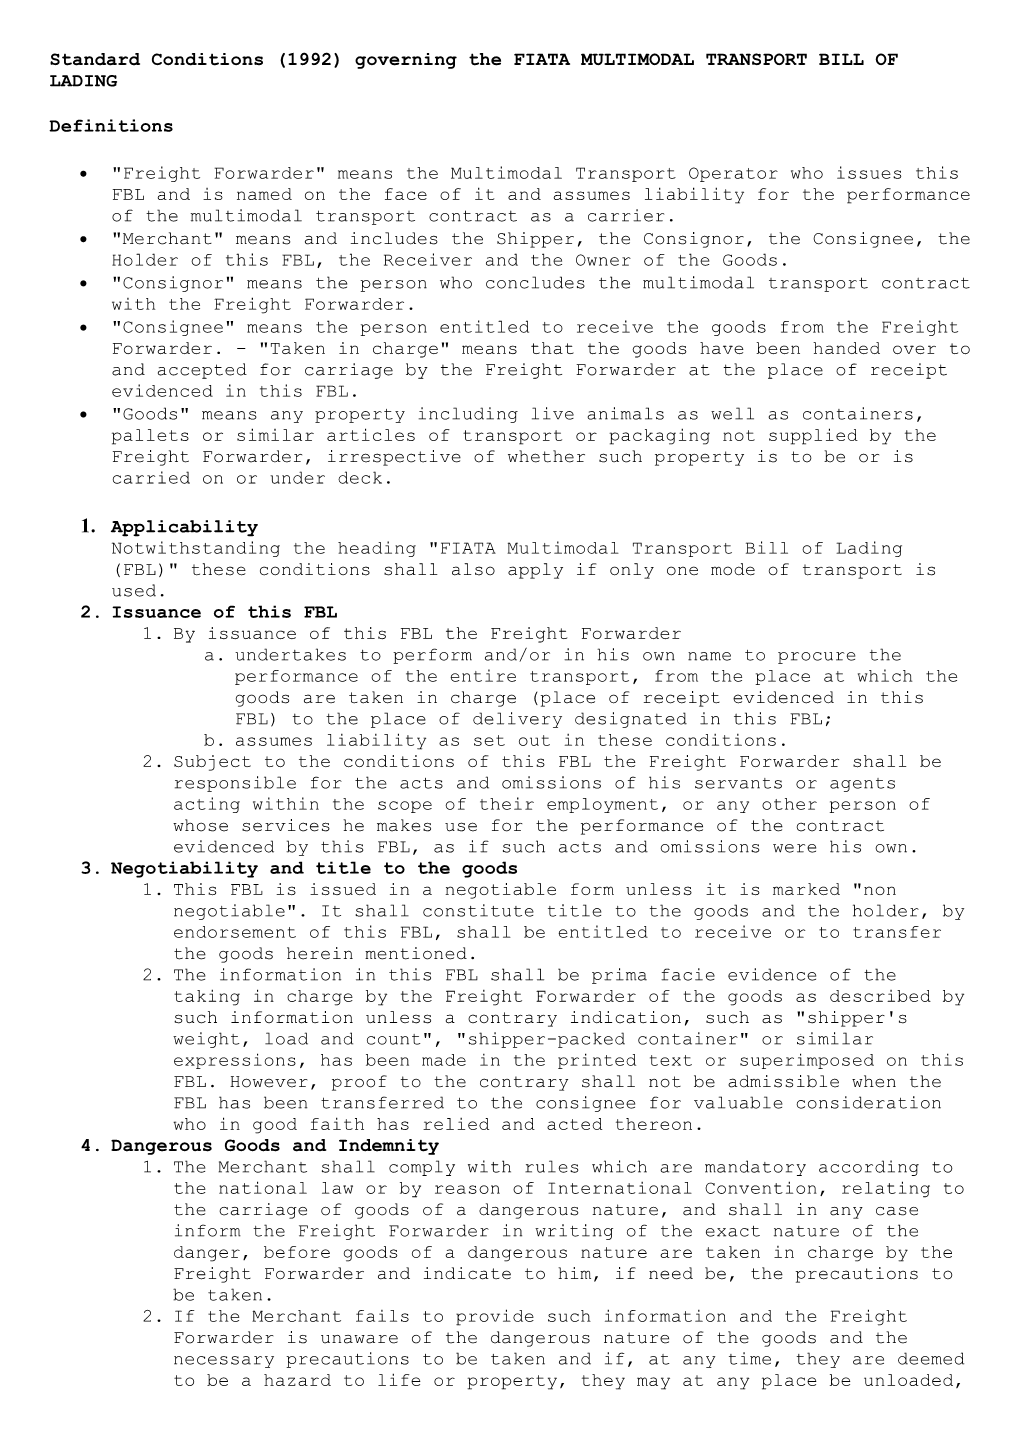 Standard Conditions (1992) Governing the FIATA MULTIMODAL TRANSPORT BILL of LADING